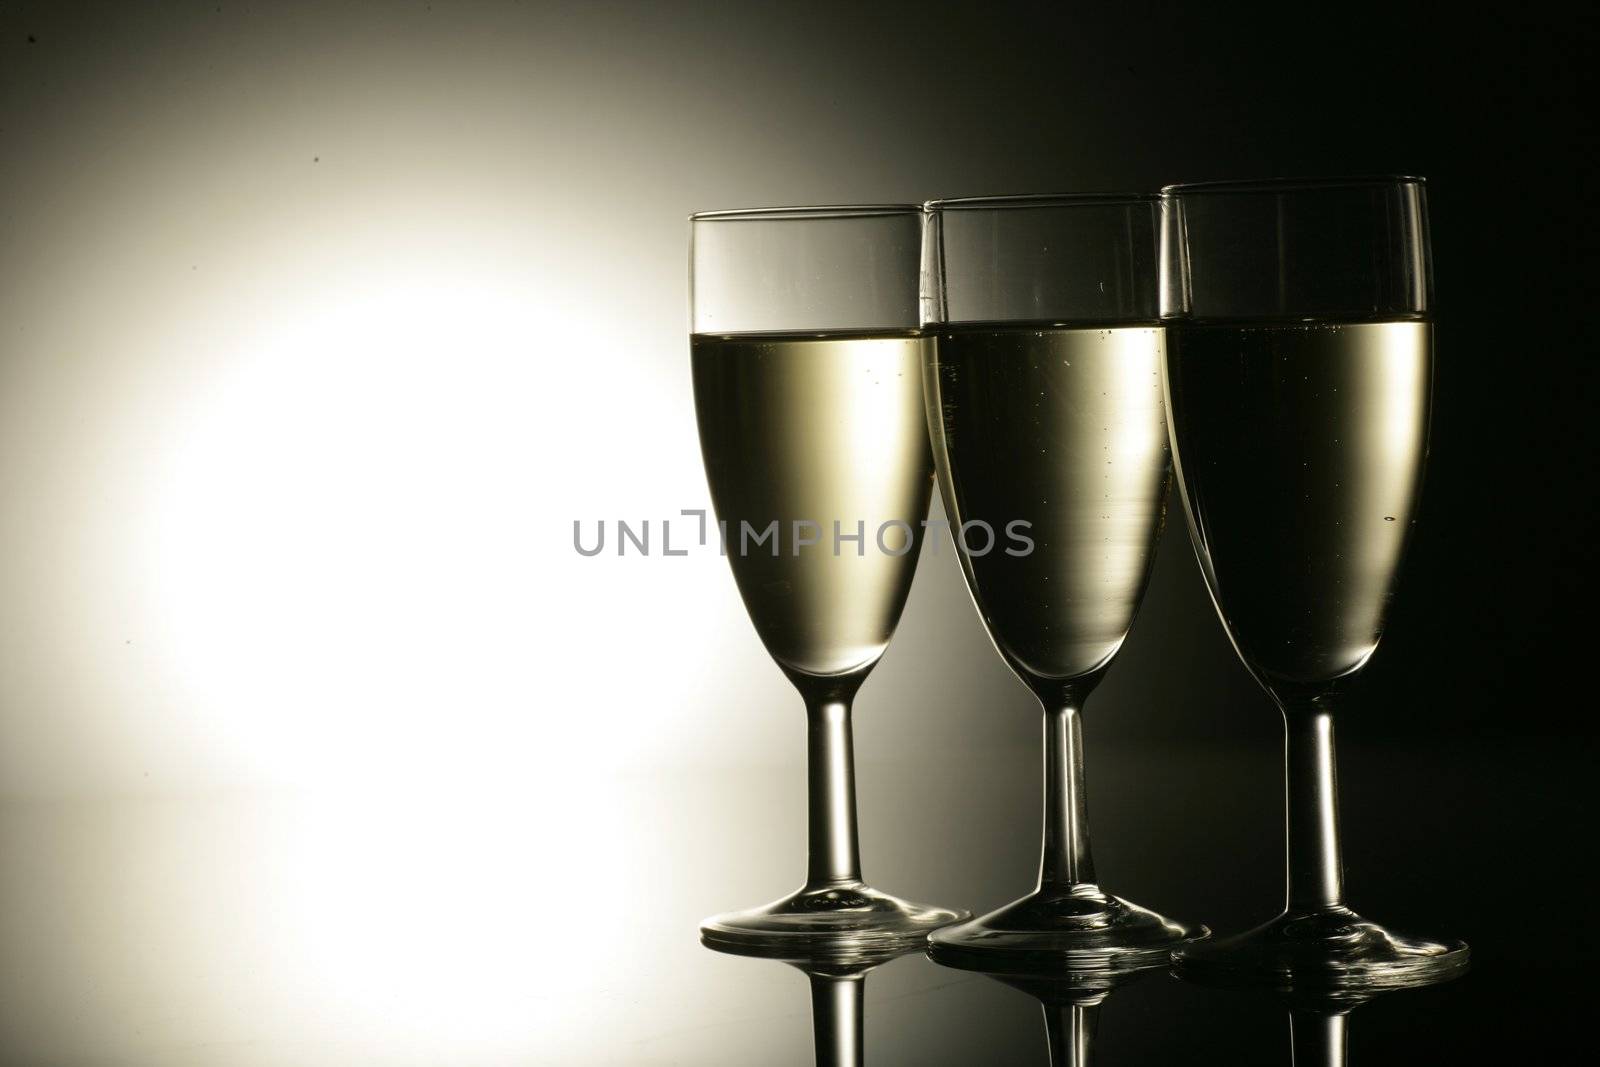 sparkling champagne wine glasses shot in studio